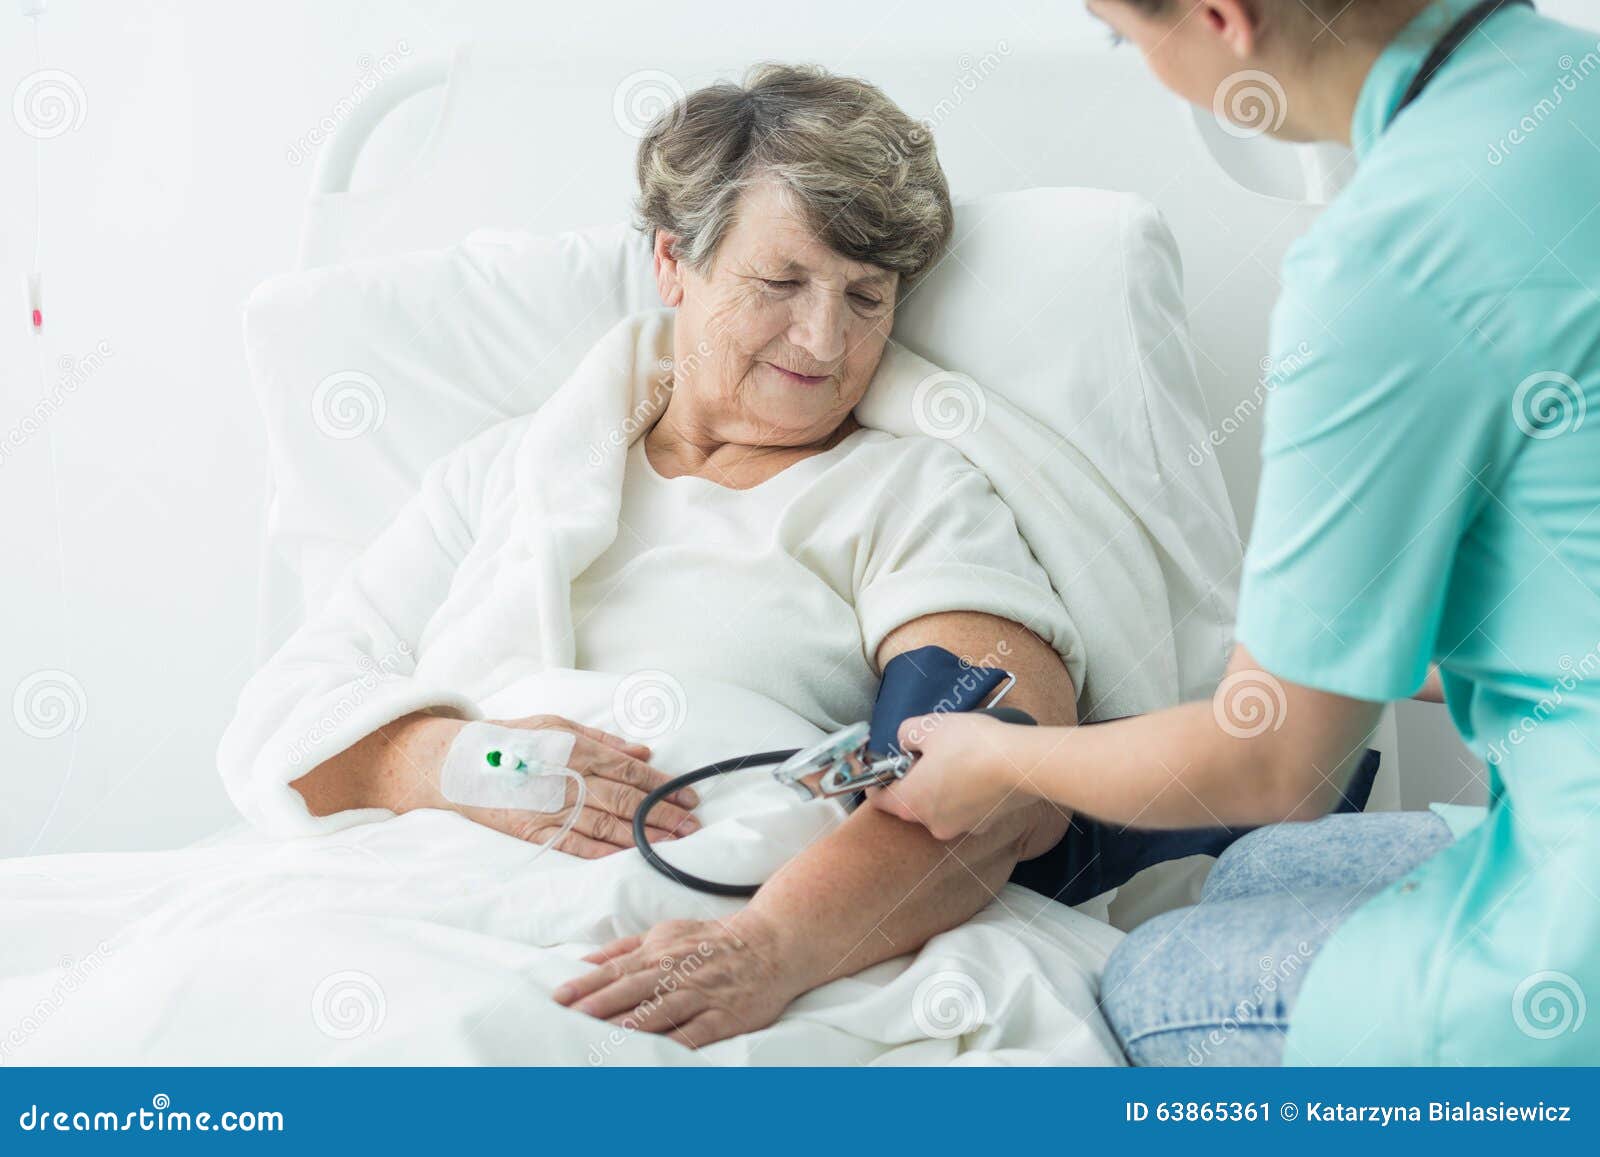 geriatric ward patient with hypertension